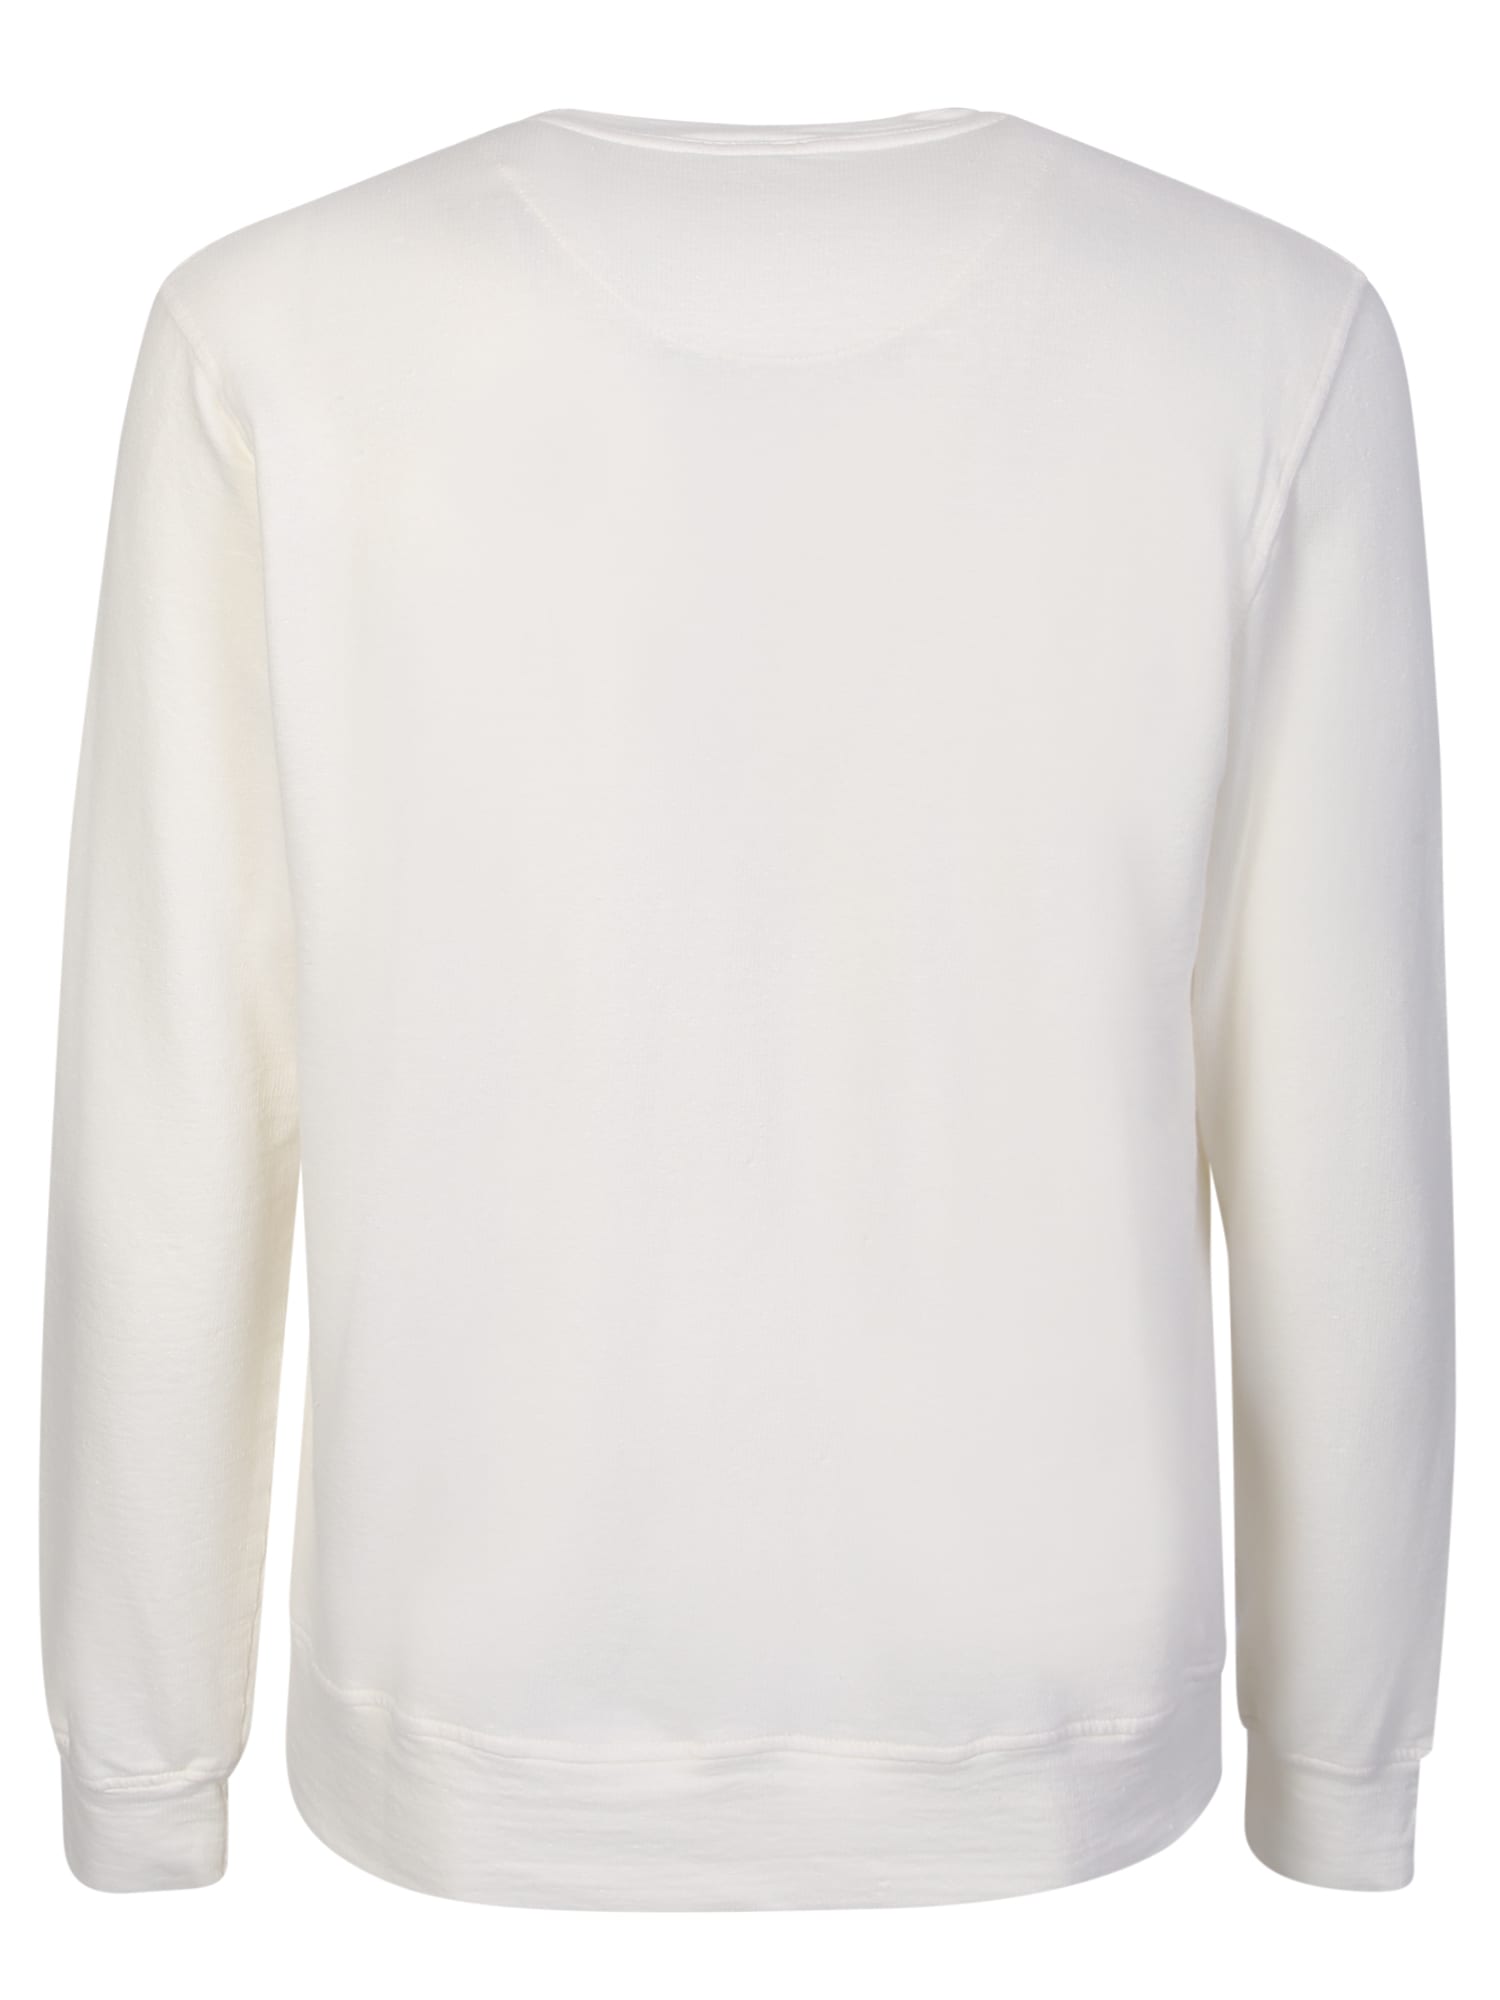 Shop Original Vintage Style White Linen Sweatshirt